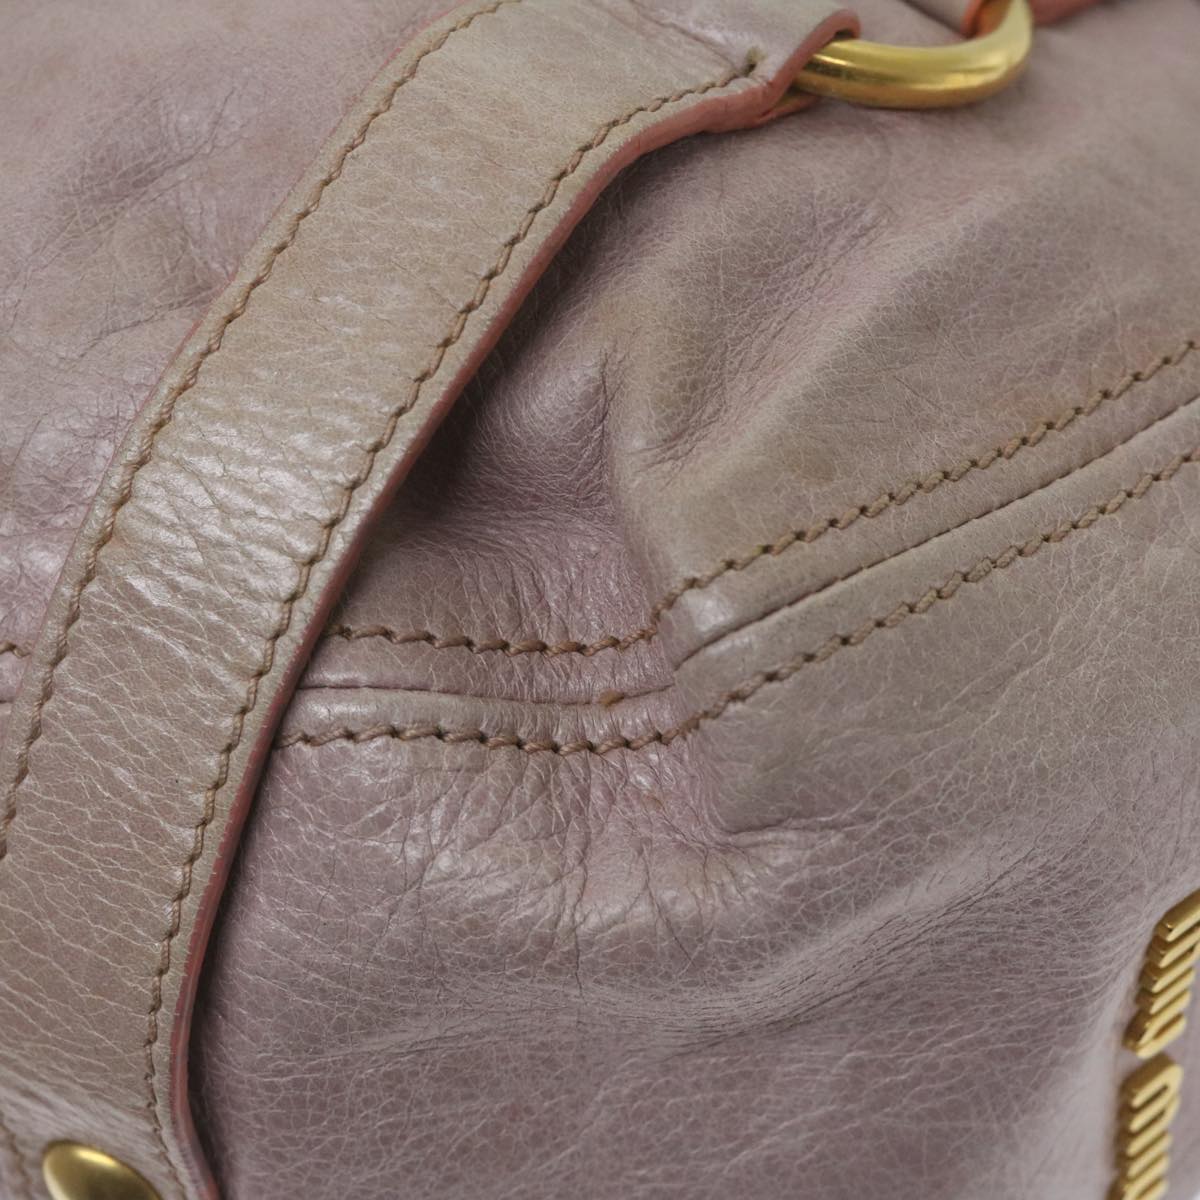 Miu Miu Shoulder Bag Leather Pink Auth 62099